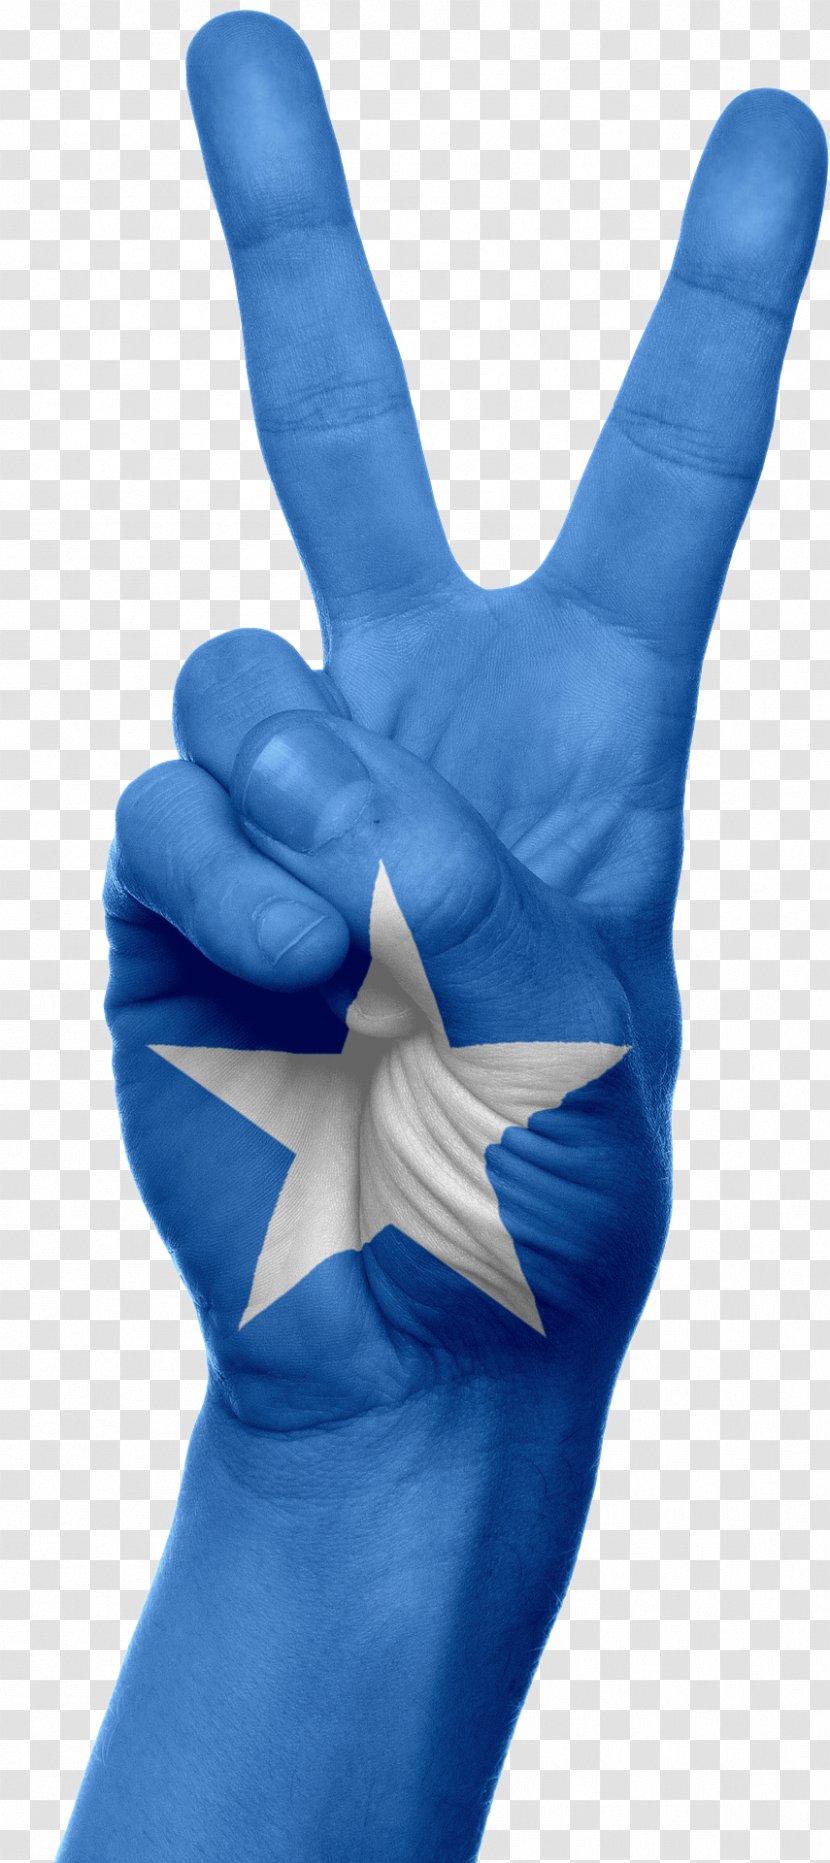 Somalia Somalis Ethiopian–Somali Conflict - Lock Screen Transparent PNG